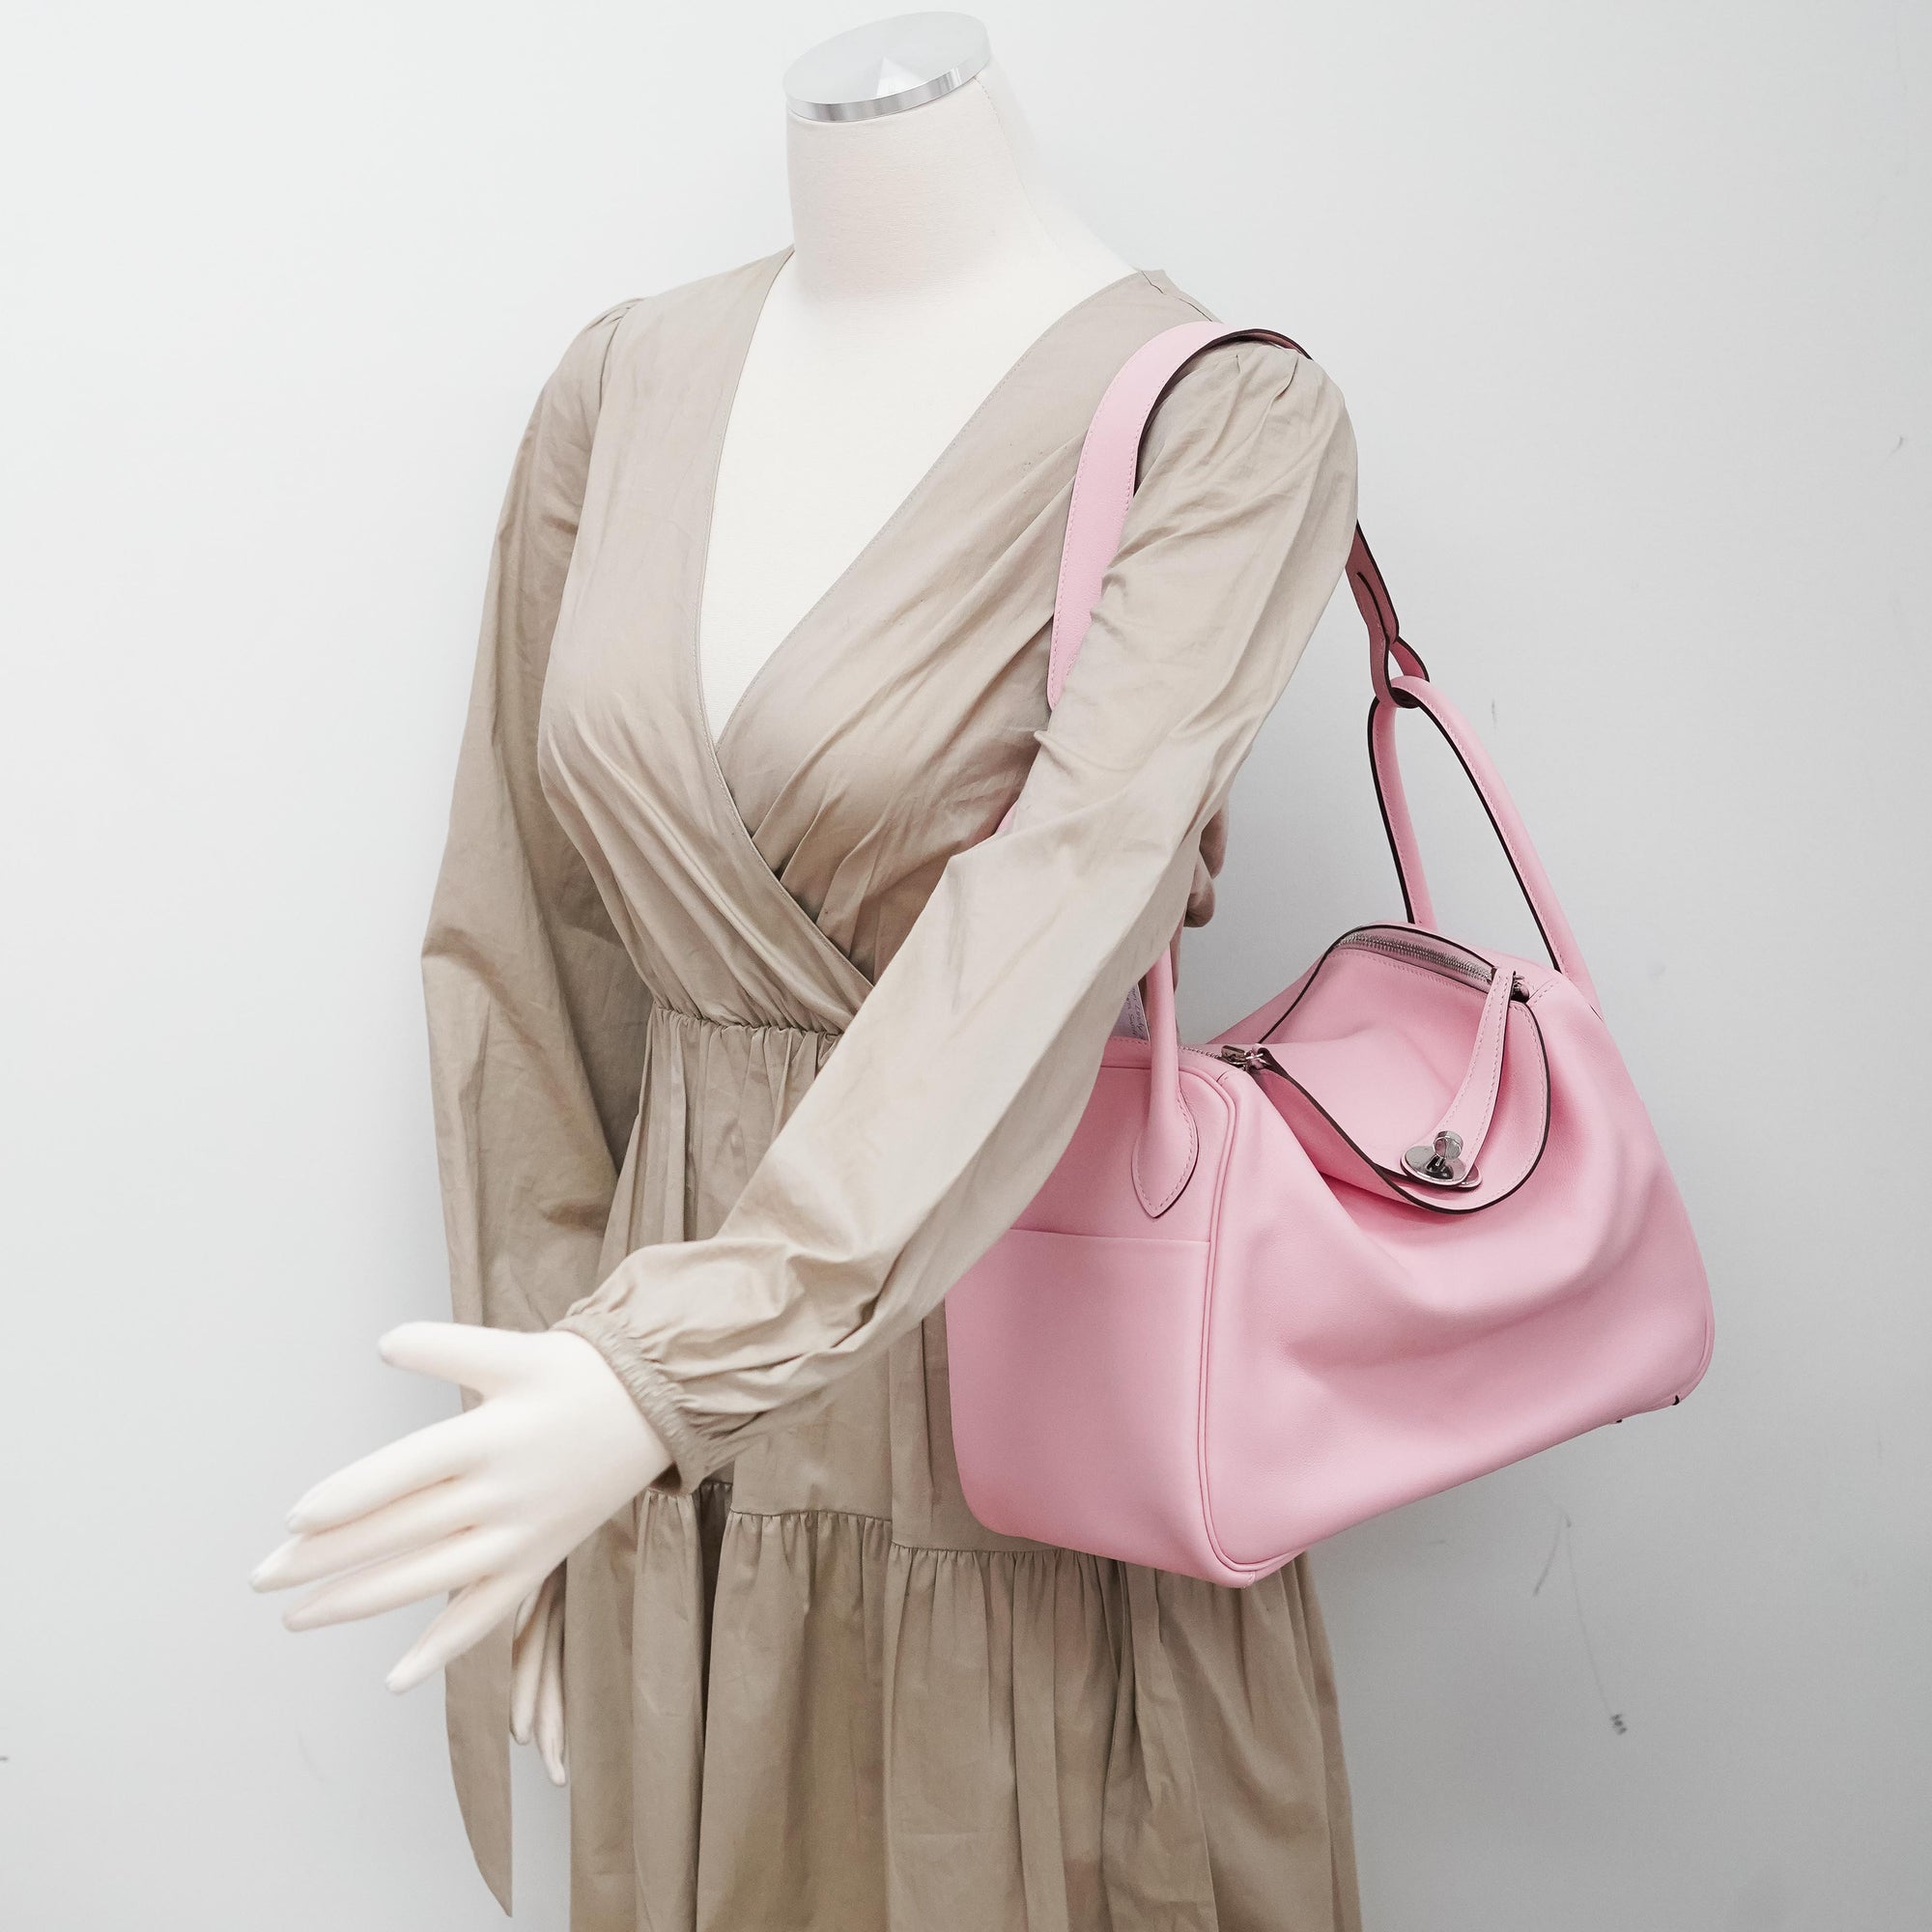 Hermes Mini Lindy Rose Sakura Swift Palladium Hardware Pink Madison Avenue Couture